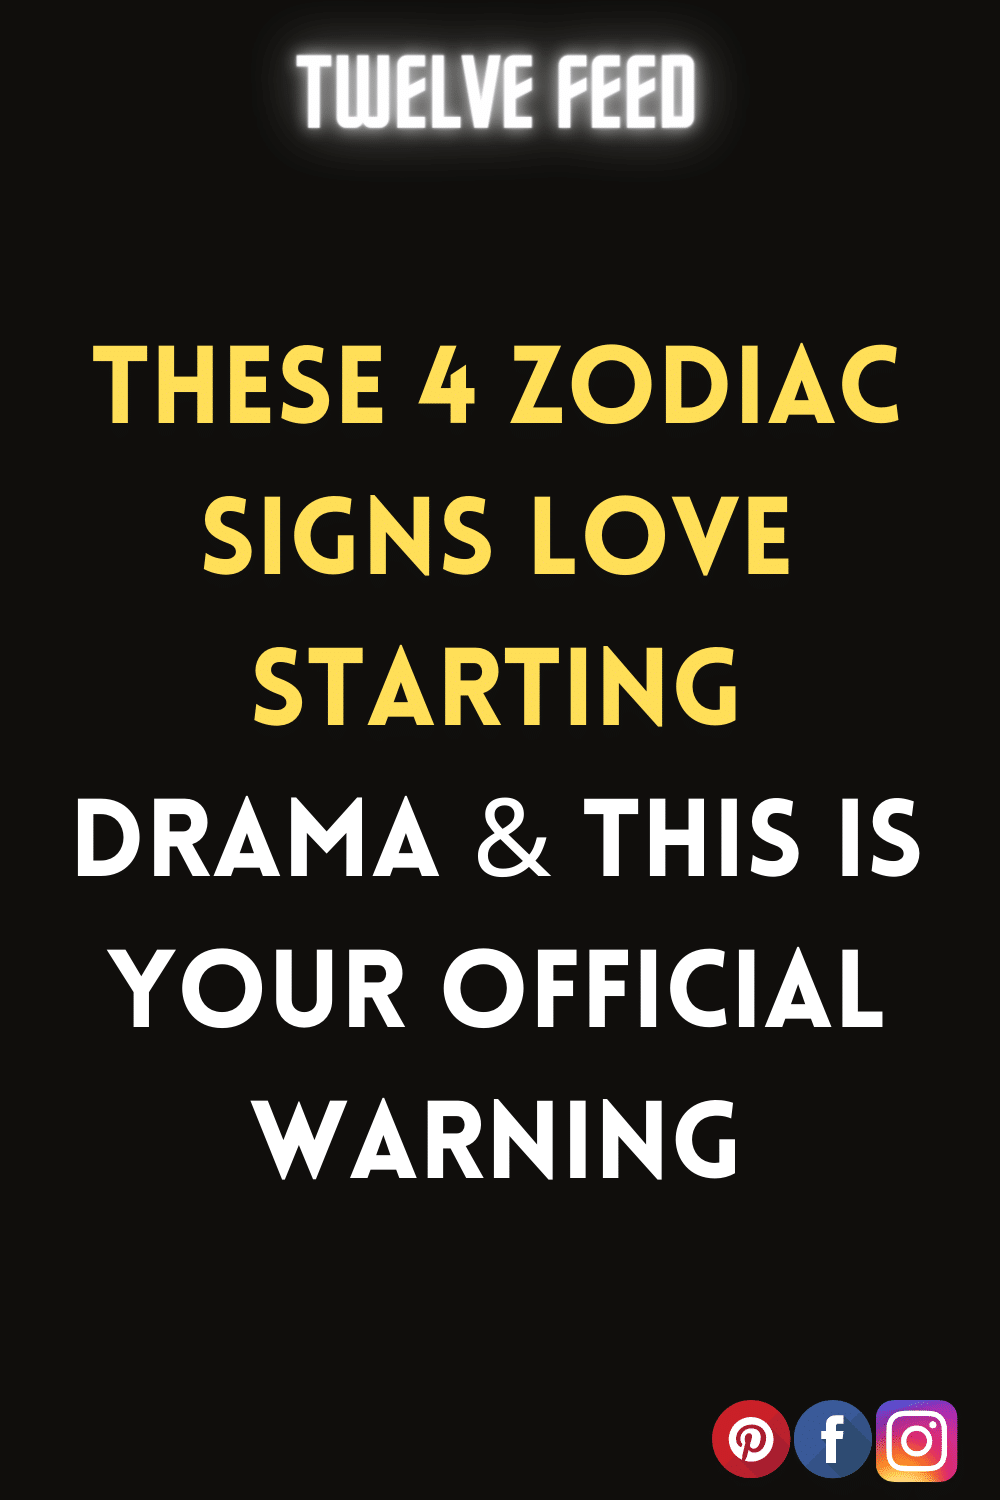  #ZodiacSigns #Astrology #horoscopes #zodiaco #relationshipgoals #love #horoscope #horoscopescompatibility #horoscopesigns #horoscopelovematch #horoscopelove #horoscopes #astrology #astrologyonline #astrologyfacts #astrologytoday #astrologymemes #AriesQoutes #CancerQoutes #LibraQoutes #TaurusQoutes #LeoQoutes #ScorpioQoutes #AquariusQoutes #GeminQoutesi #VirgoQoutes #SagittariusQoutes #PiscesQoutes #capricornQoutes #tarotcards #zodiacmemes #magic #spirituality #astrologymemes